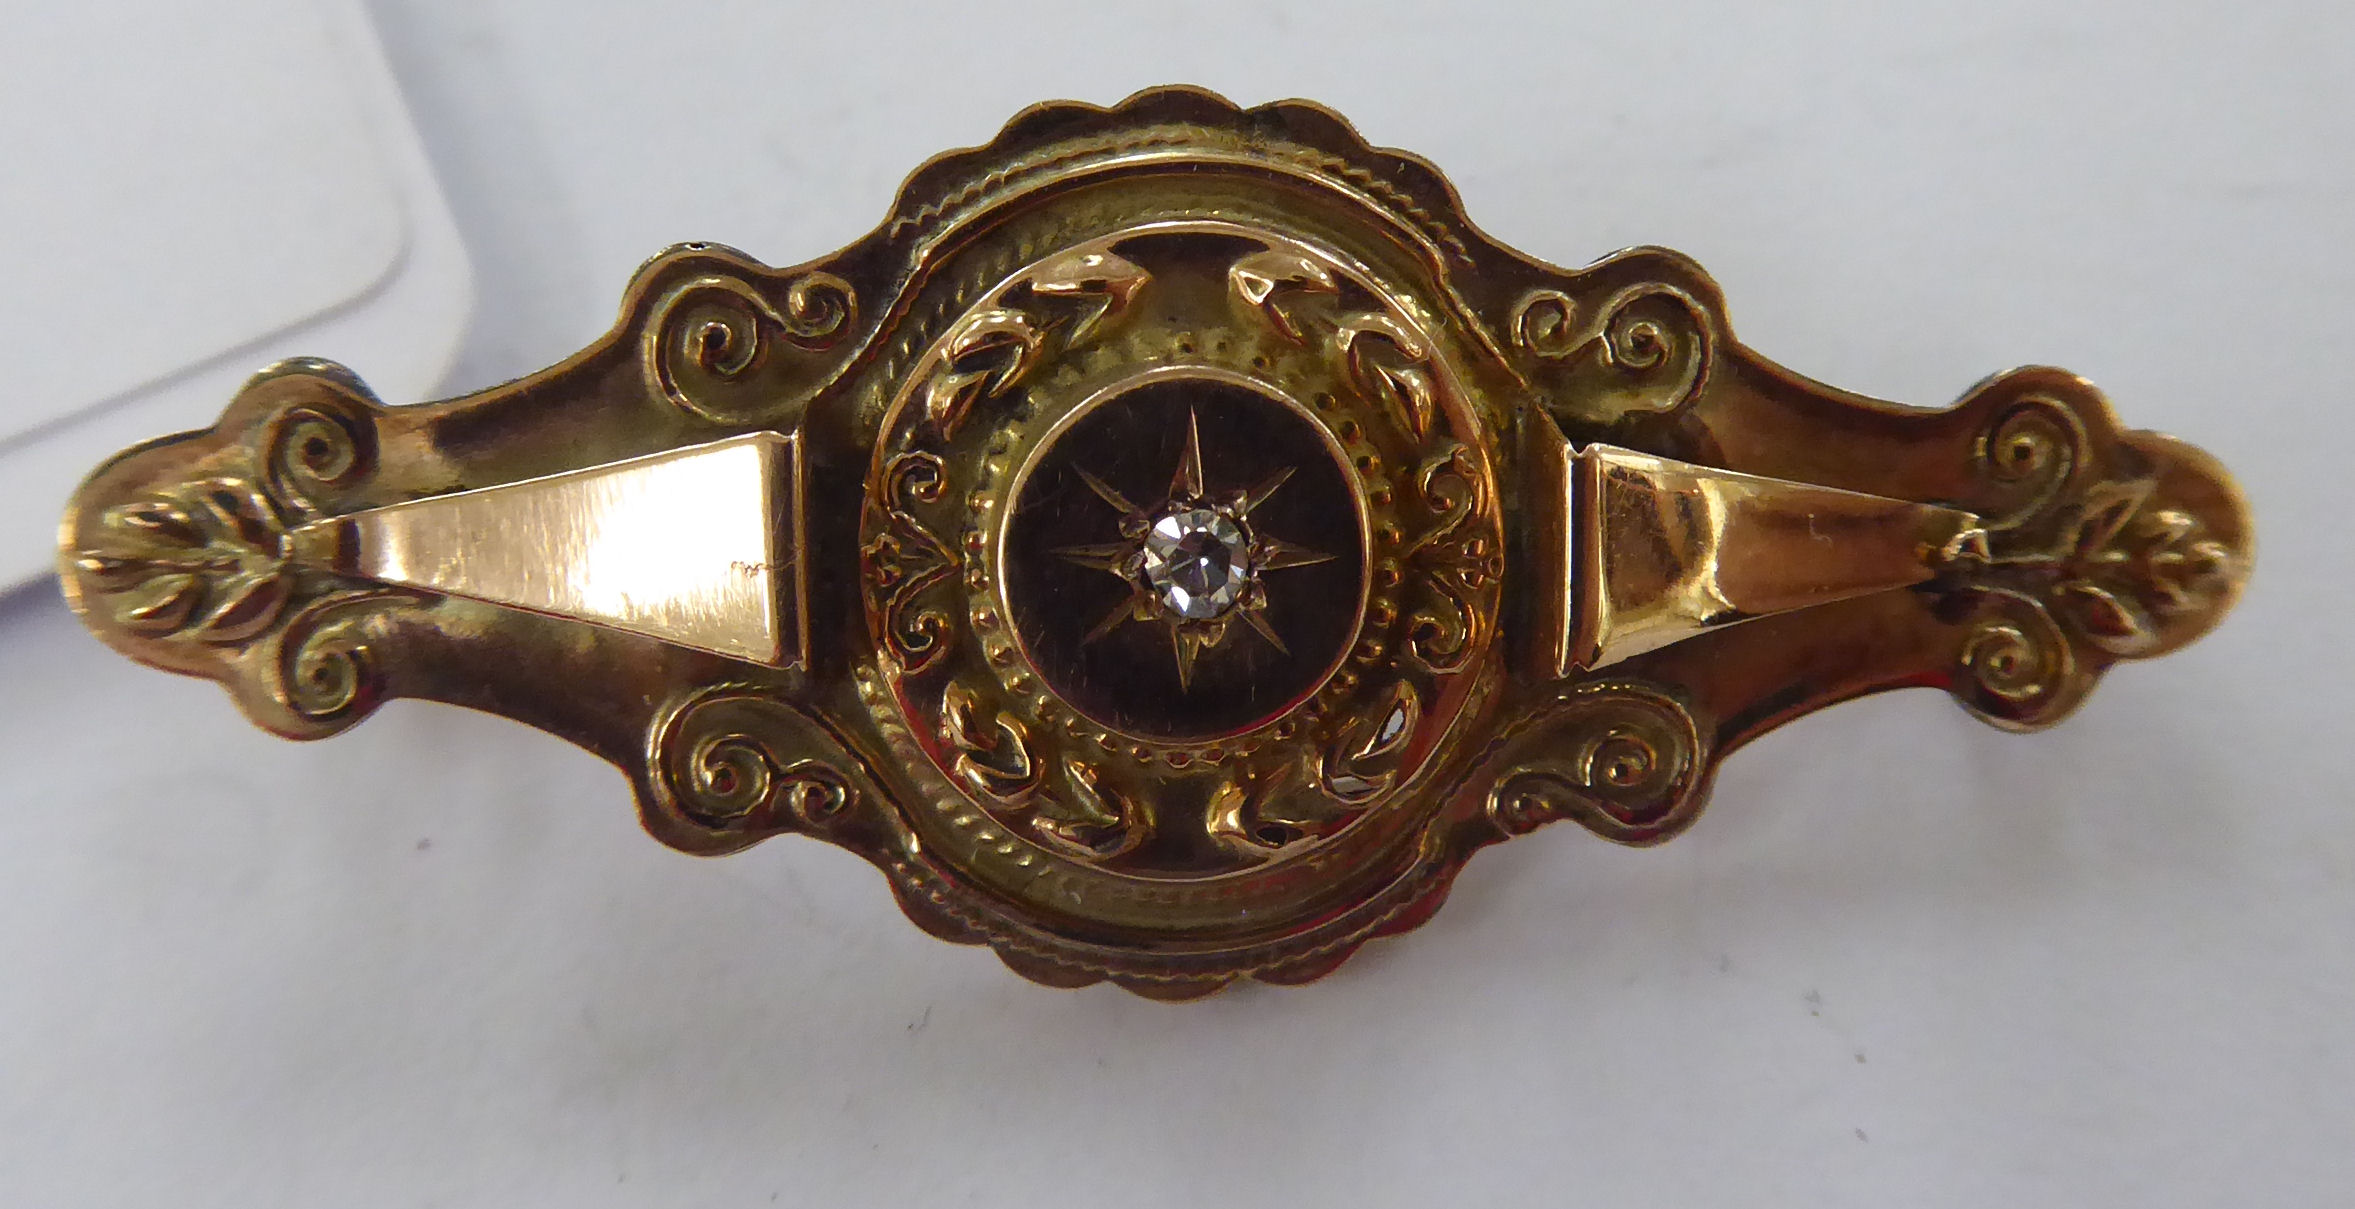 An 'antique' 9ct gold brooch,